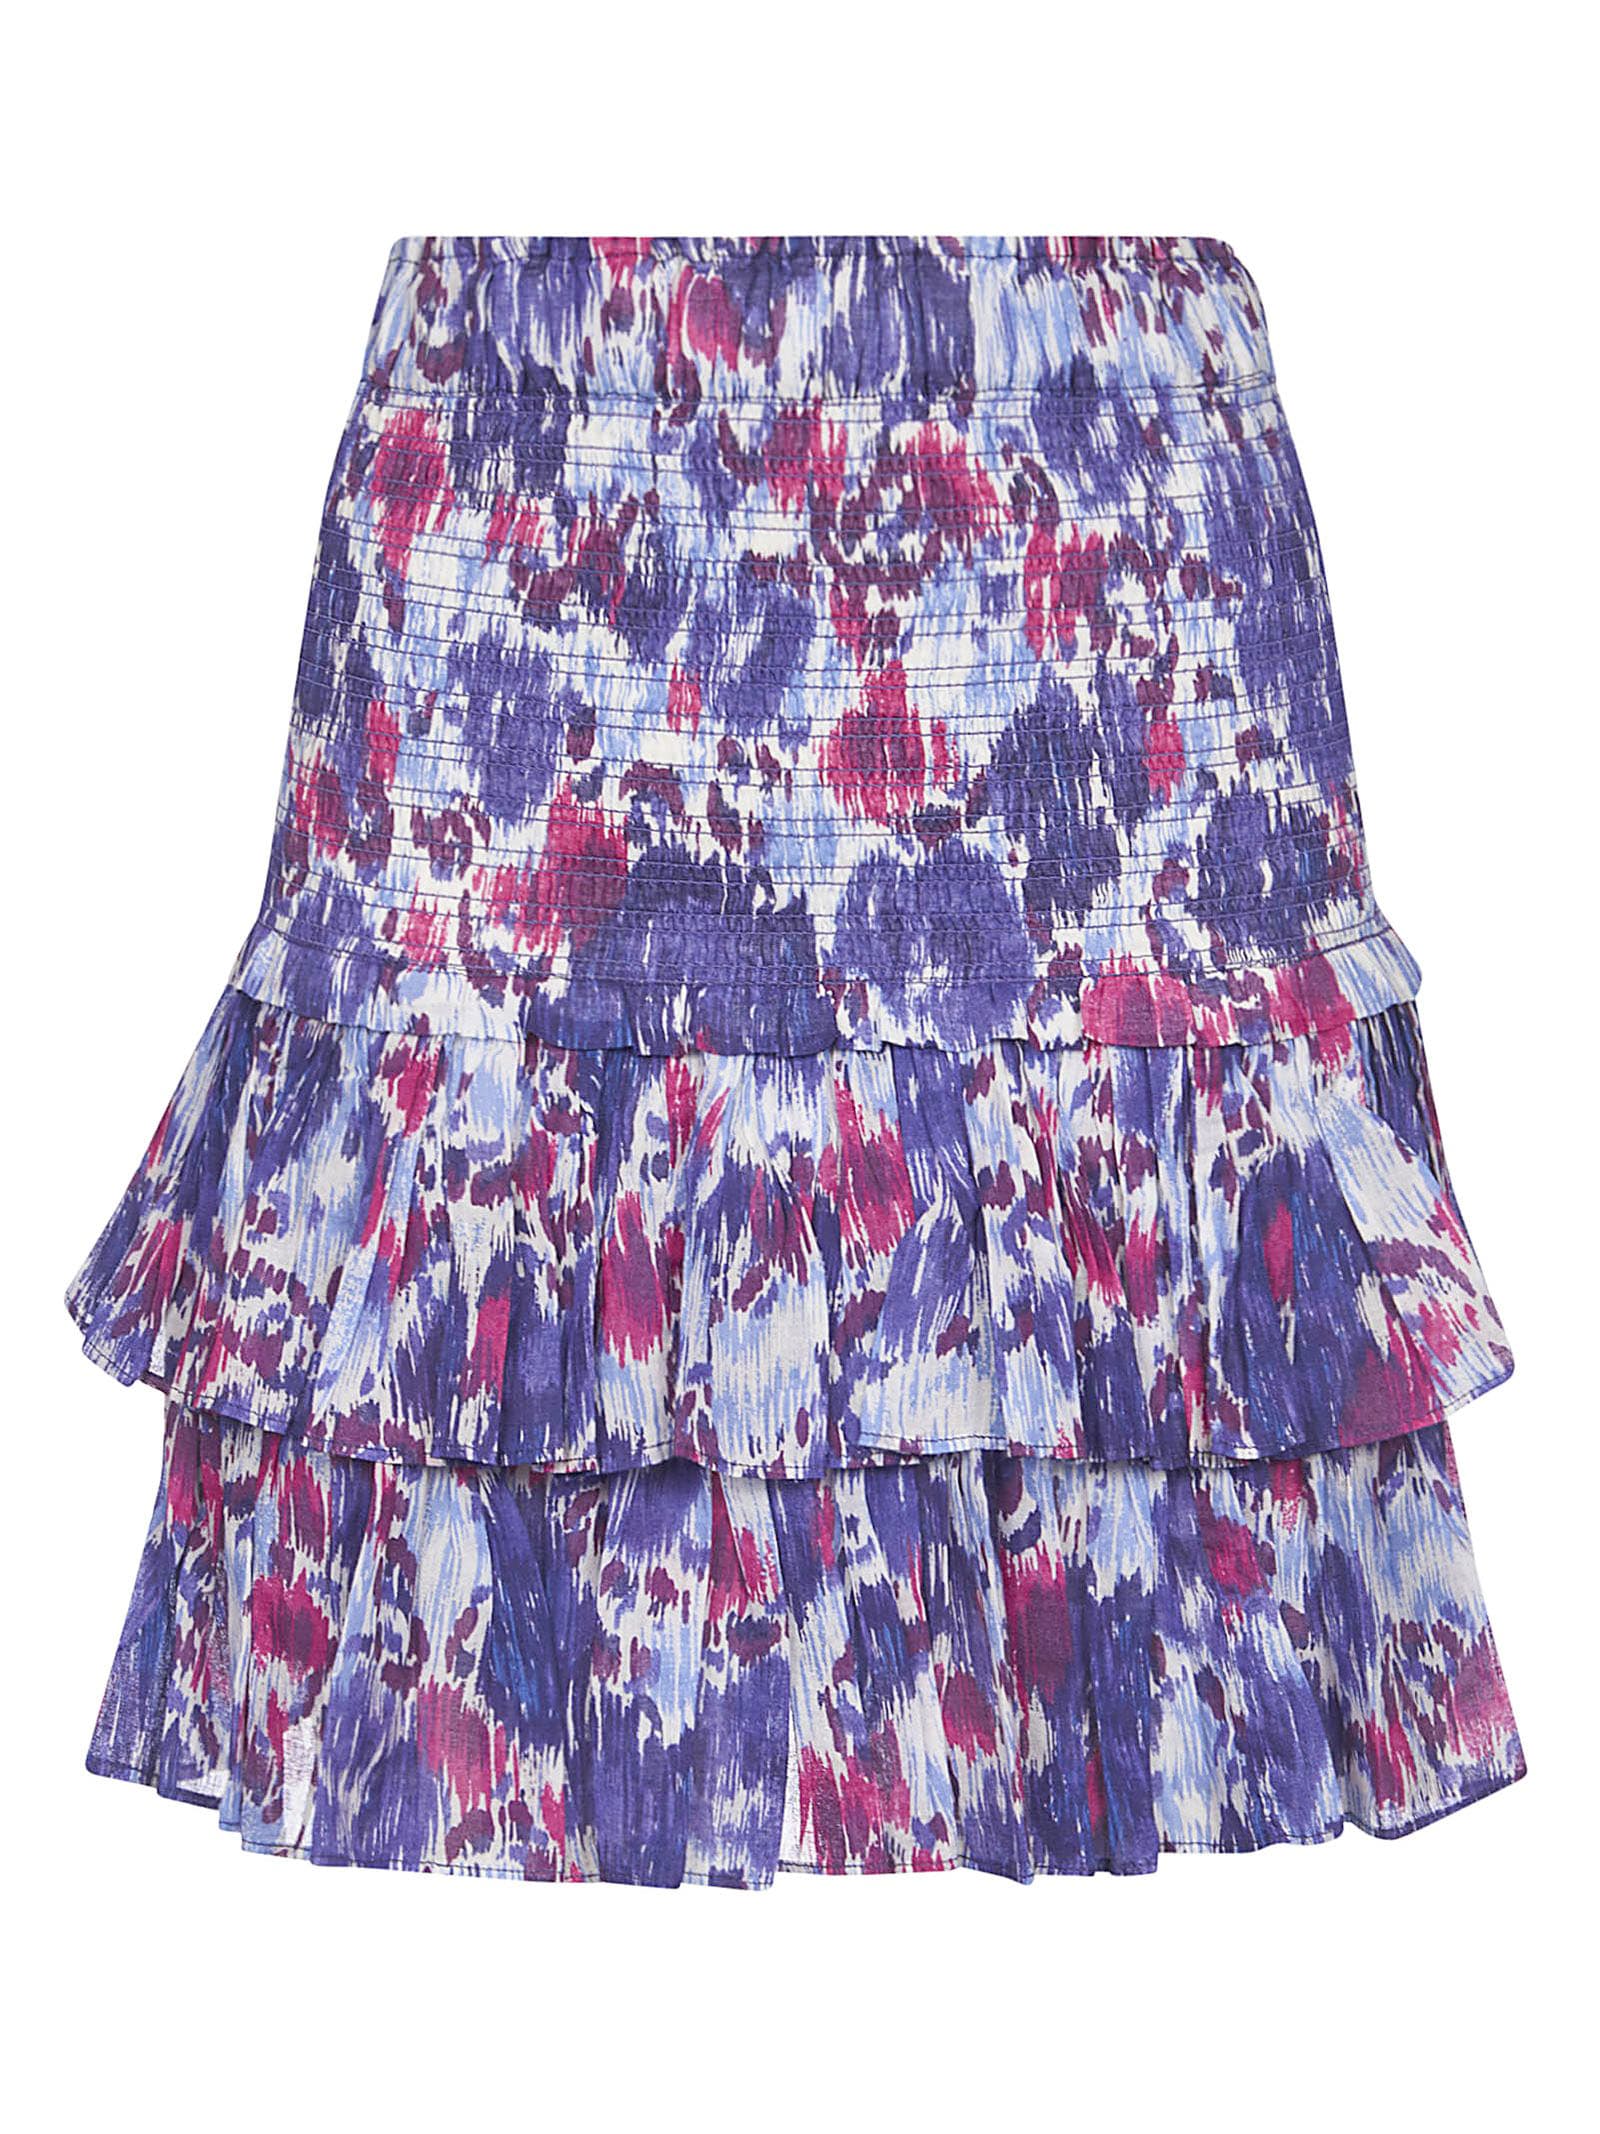 Isabel Marant Light Blue And Pink Cotton Skirt